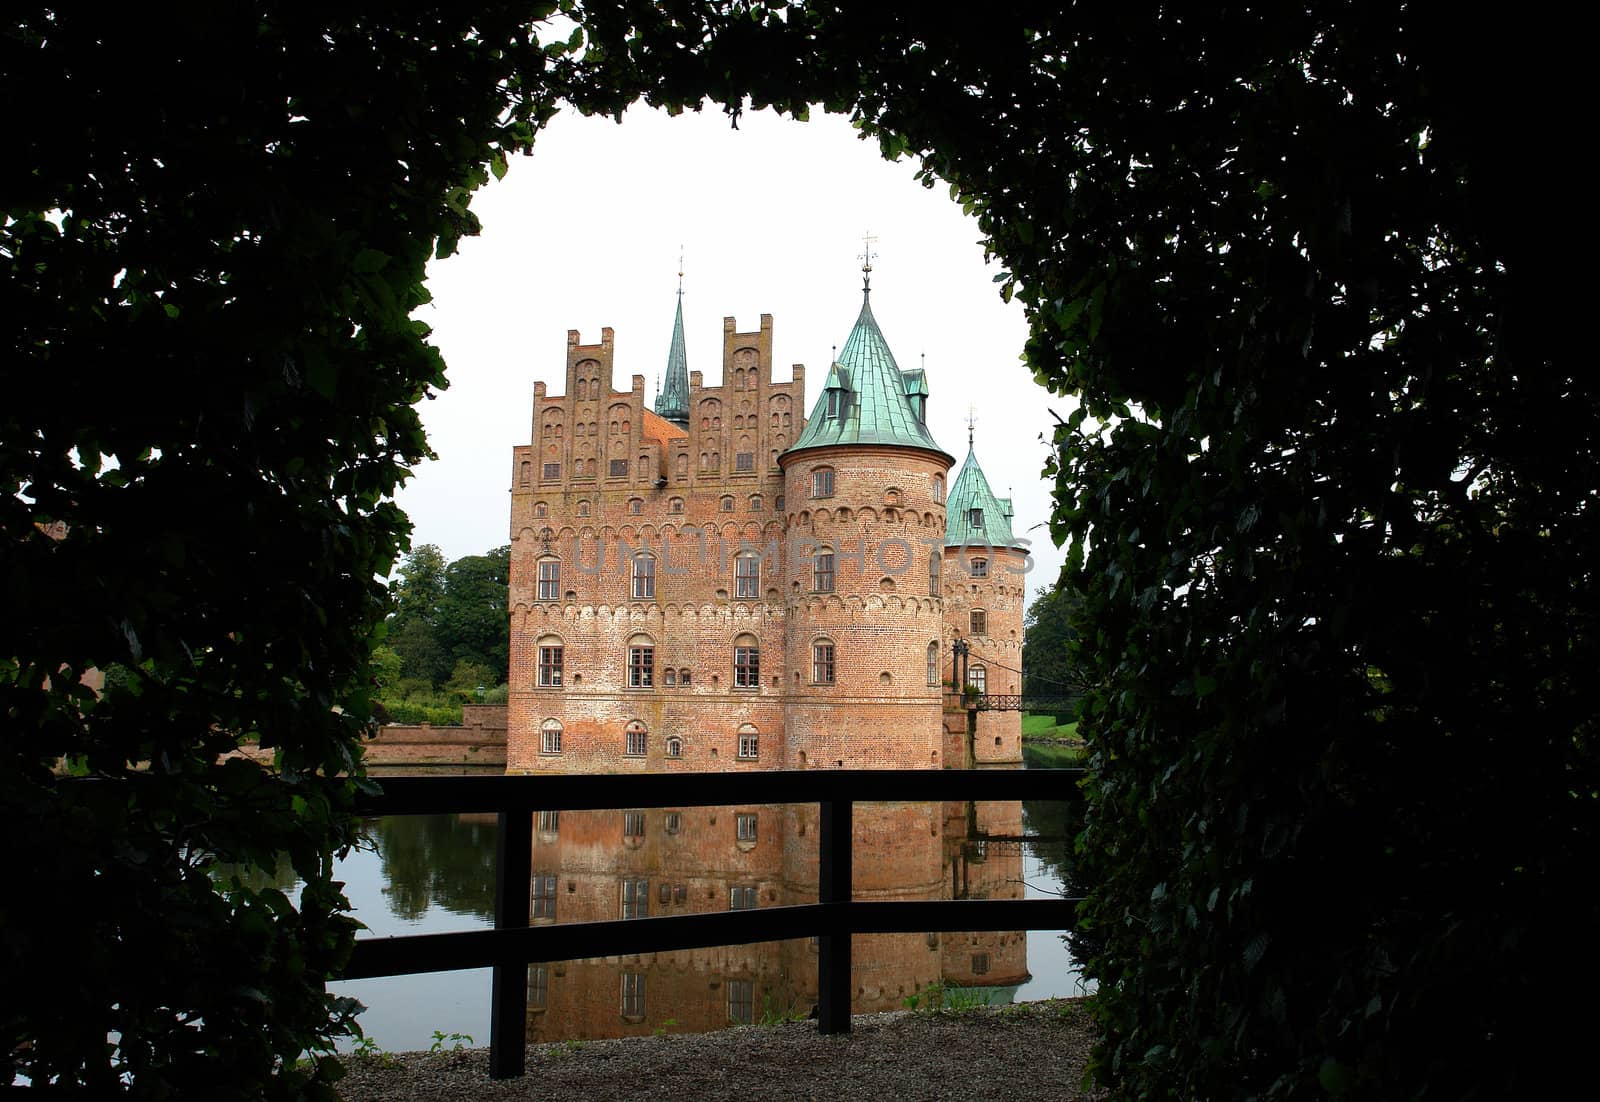  Egeskov castle slot landmark fairy tale castle in Funen Denmark view from the garden                               